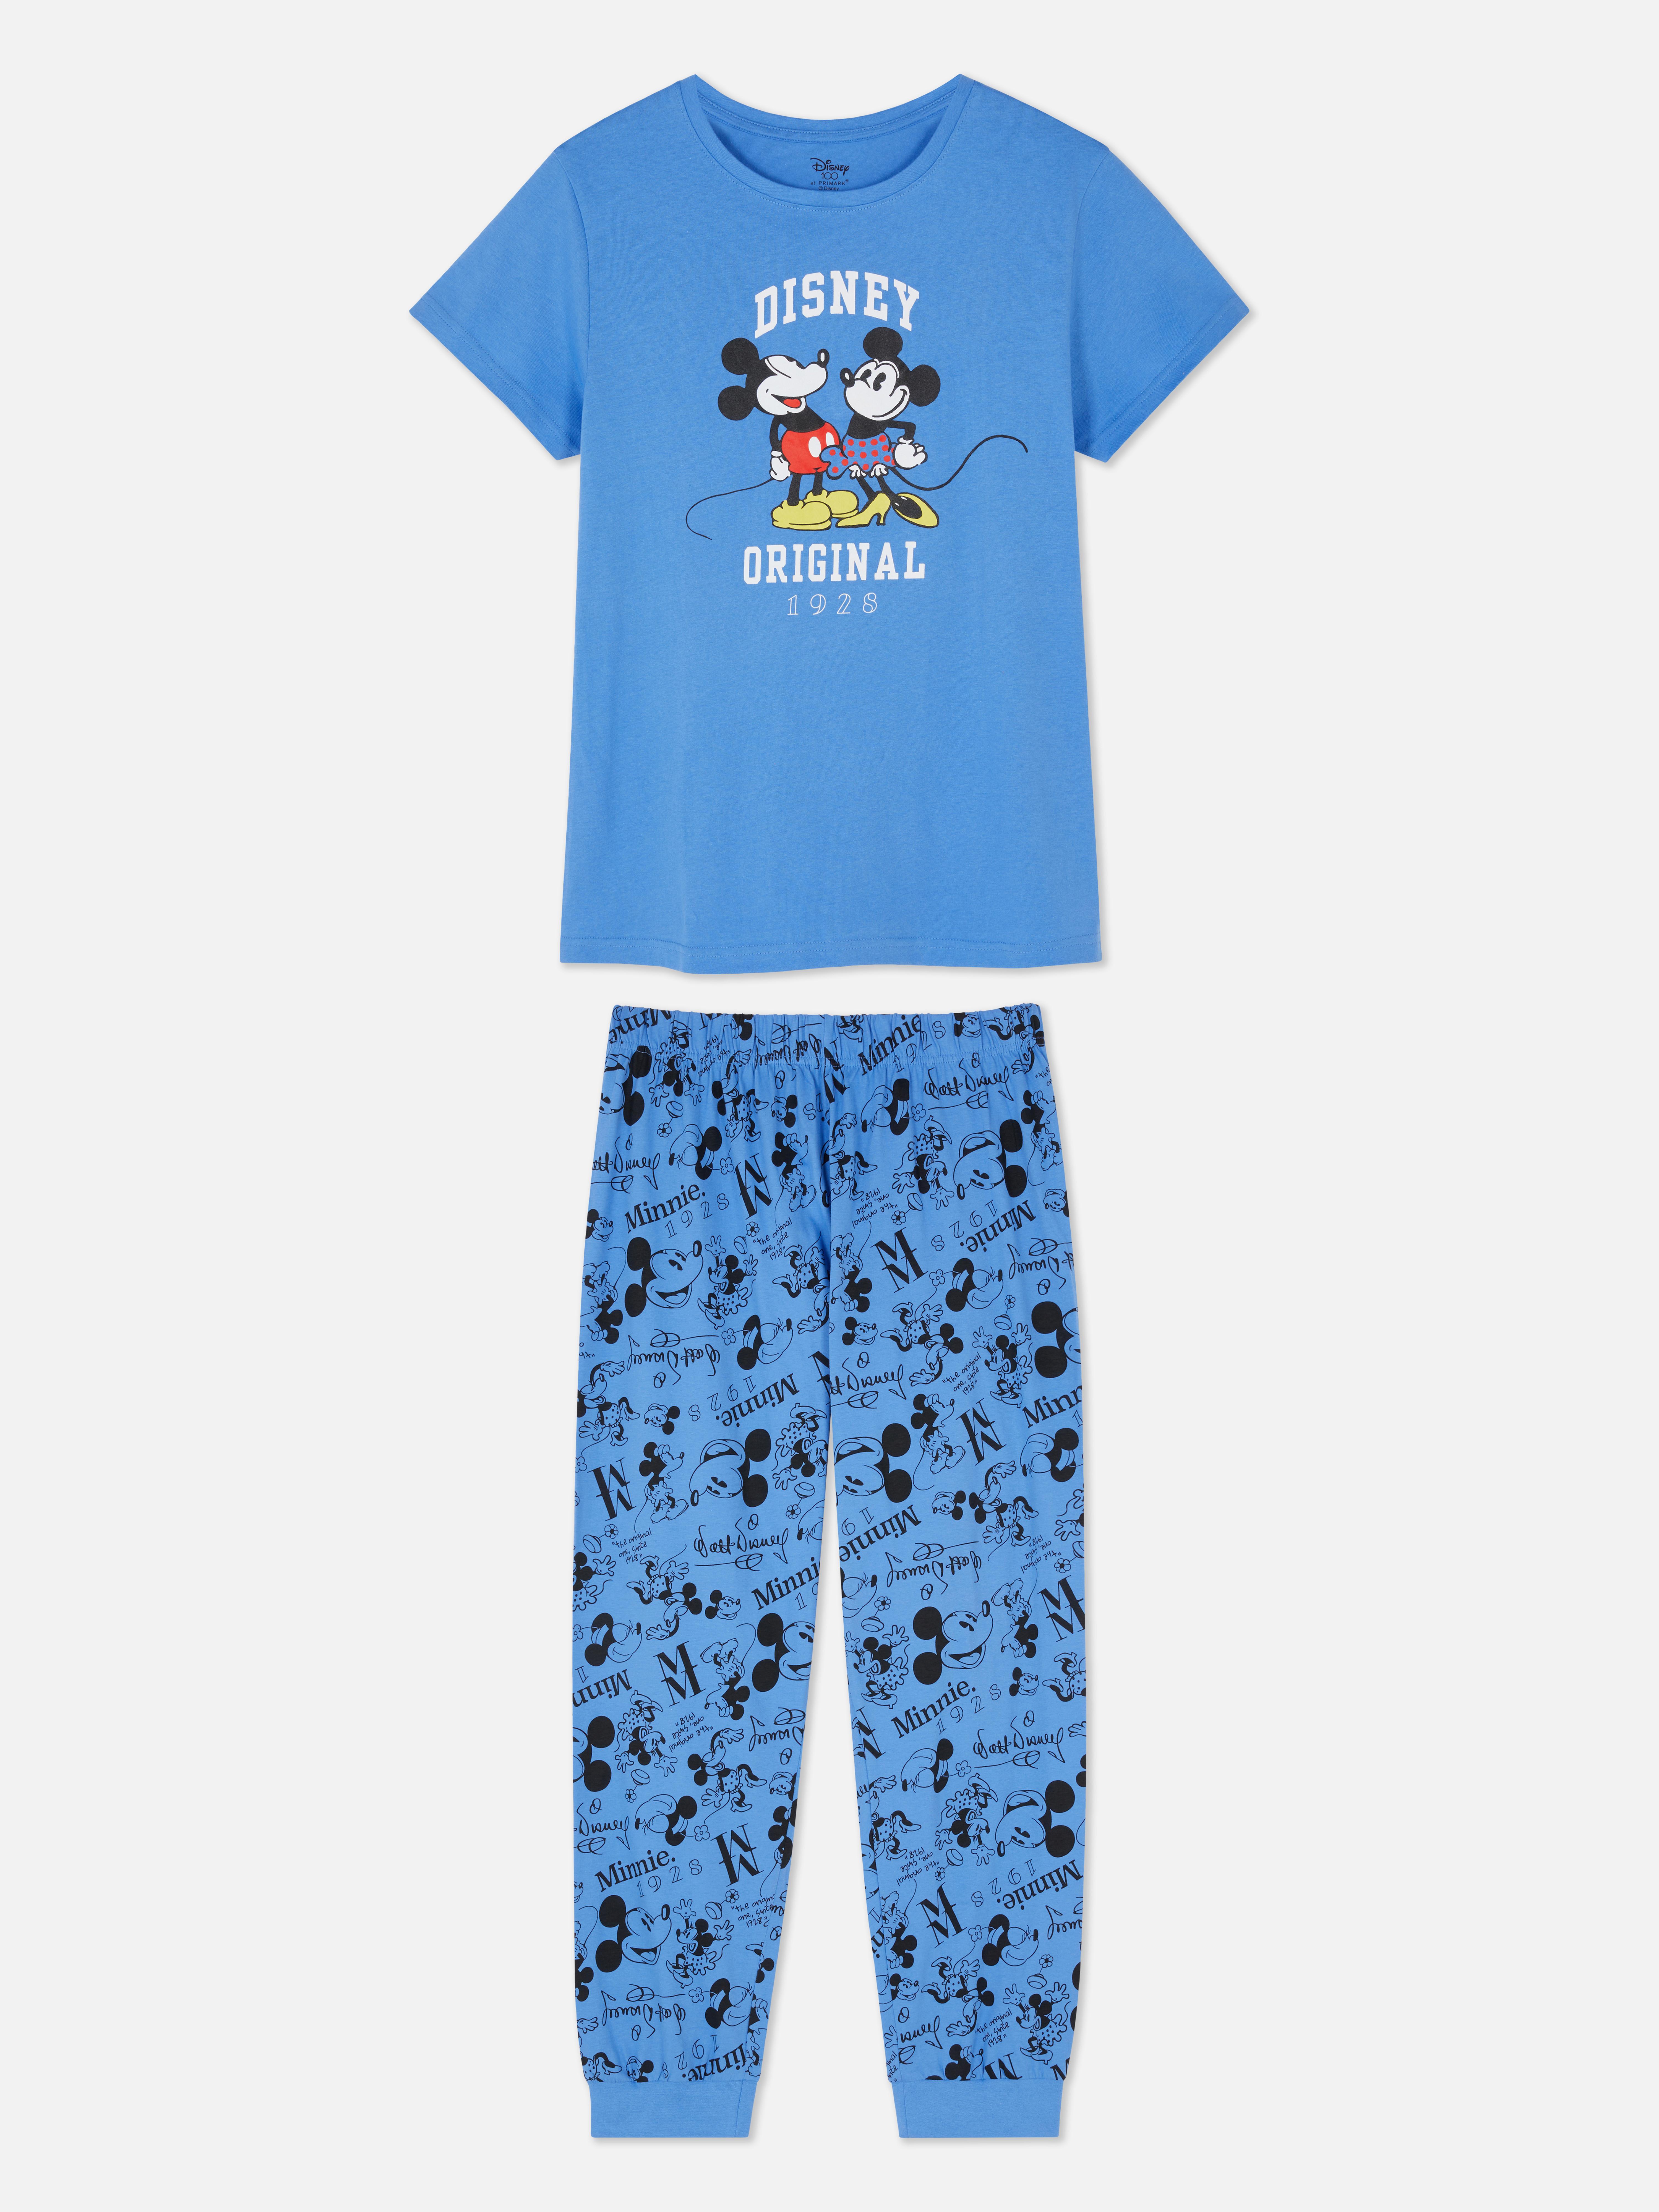 Disney's Mickey Mouse Graphic Pyjamas Set | Primark